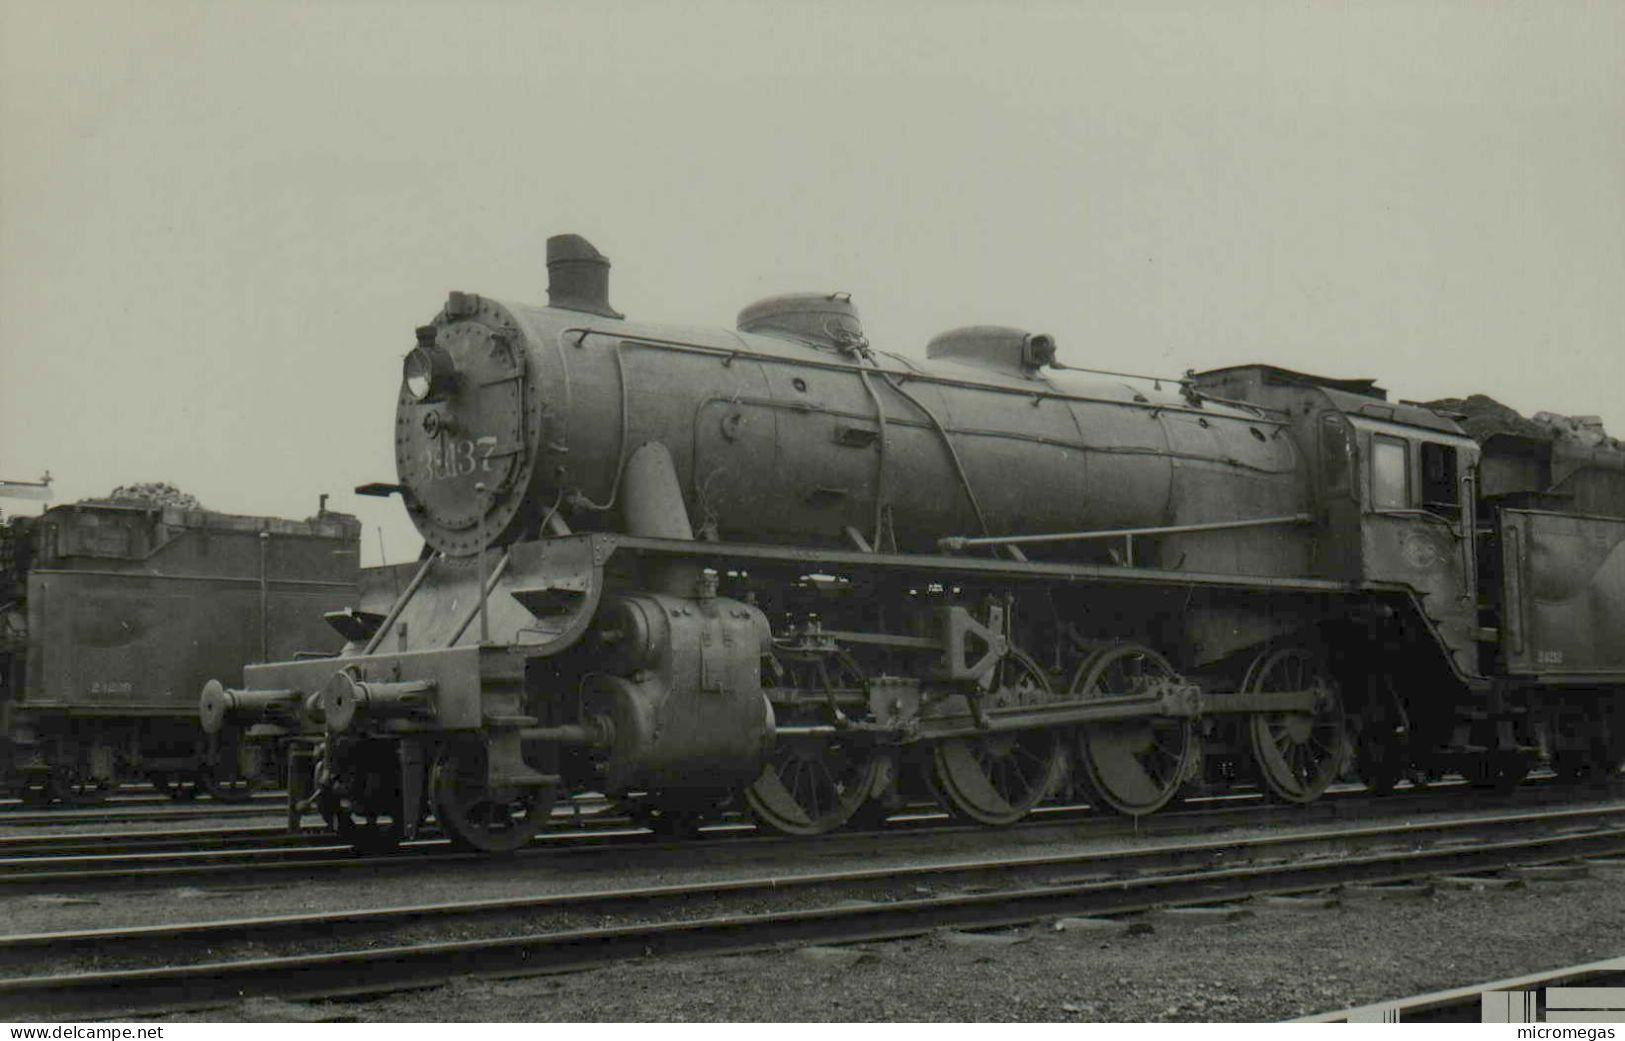 Locomotive 38-137 - Cliché J. Renaud - Trenes